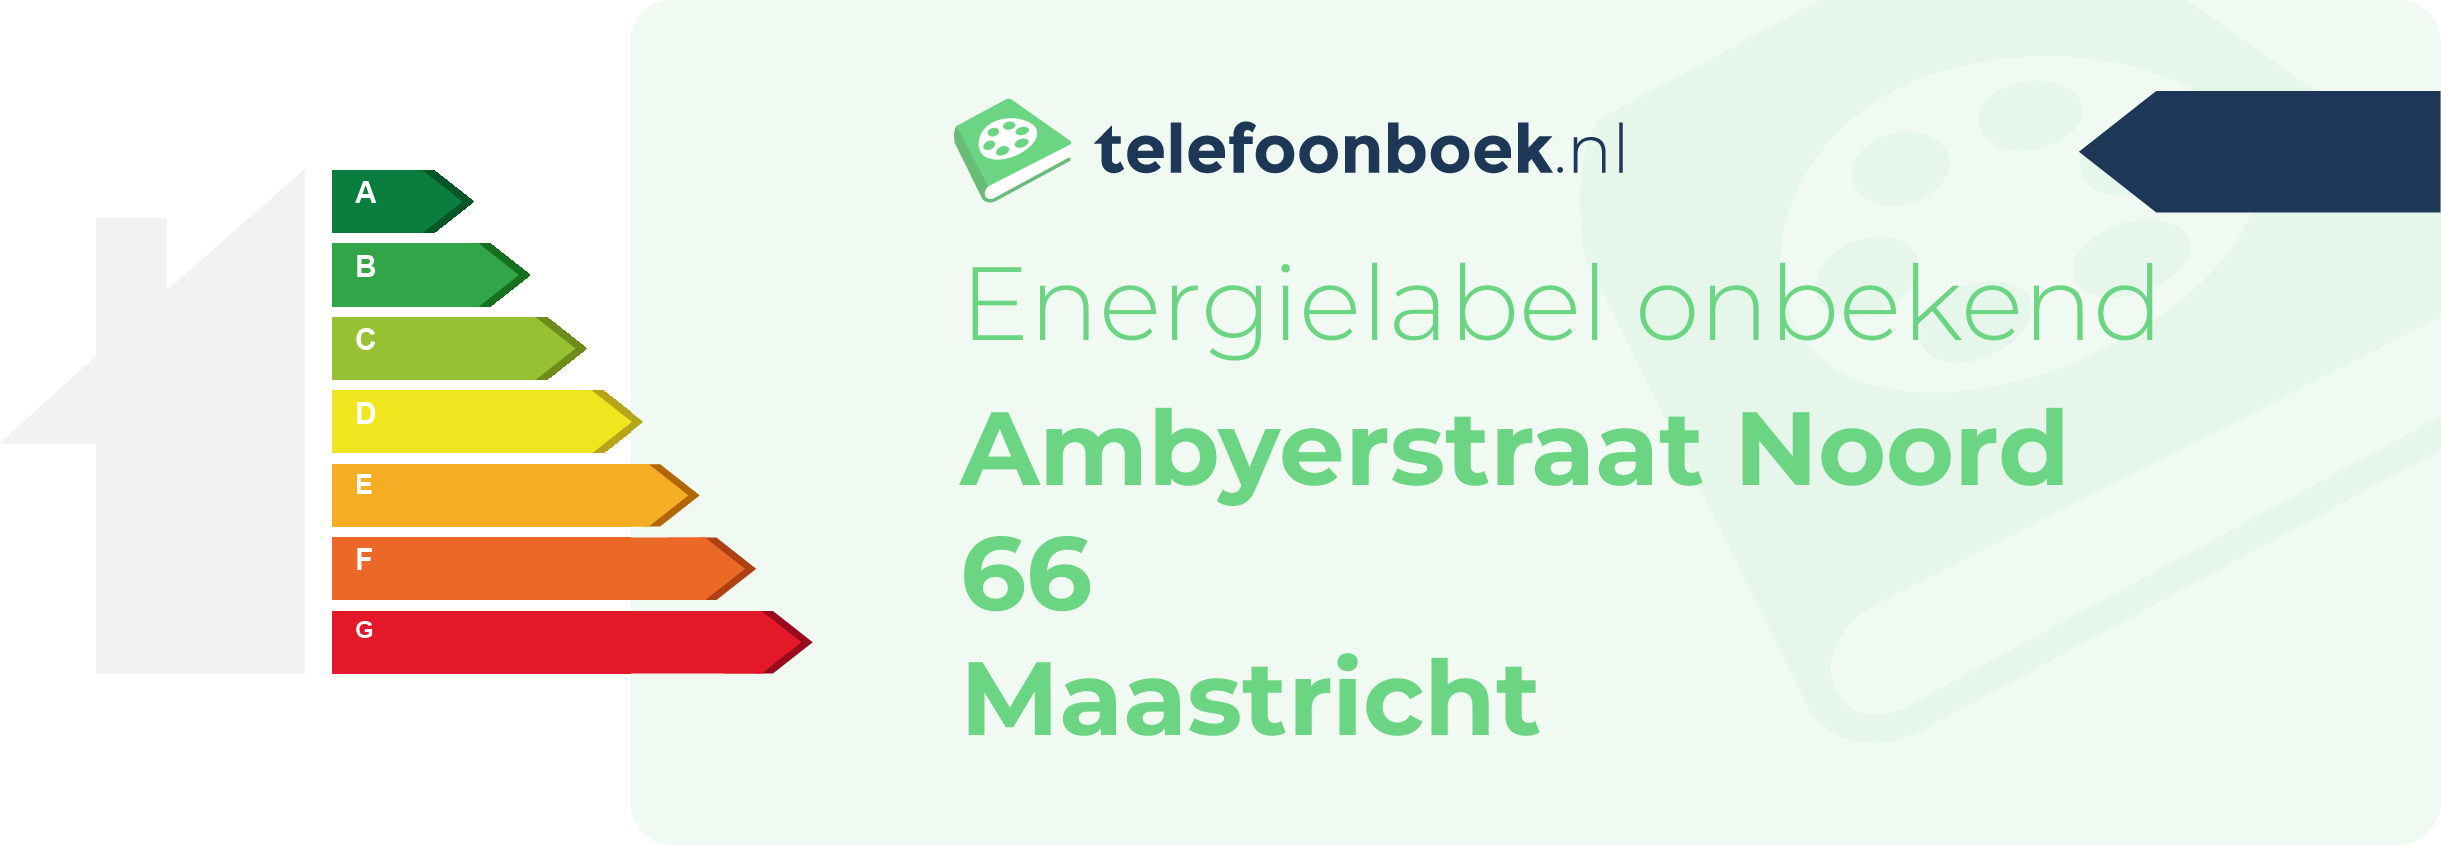 Energielabel Ambyerstraat Noord 66 Maastricht